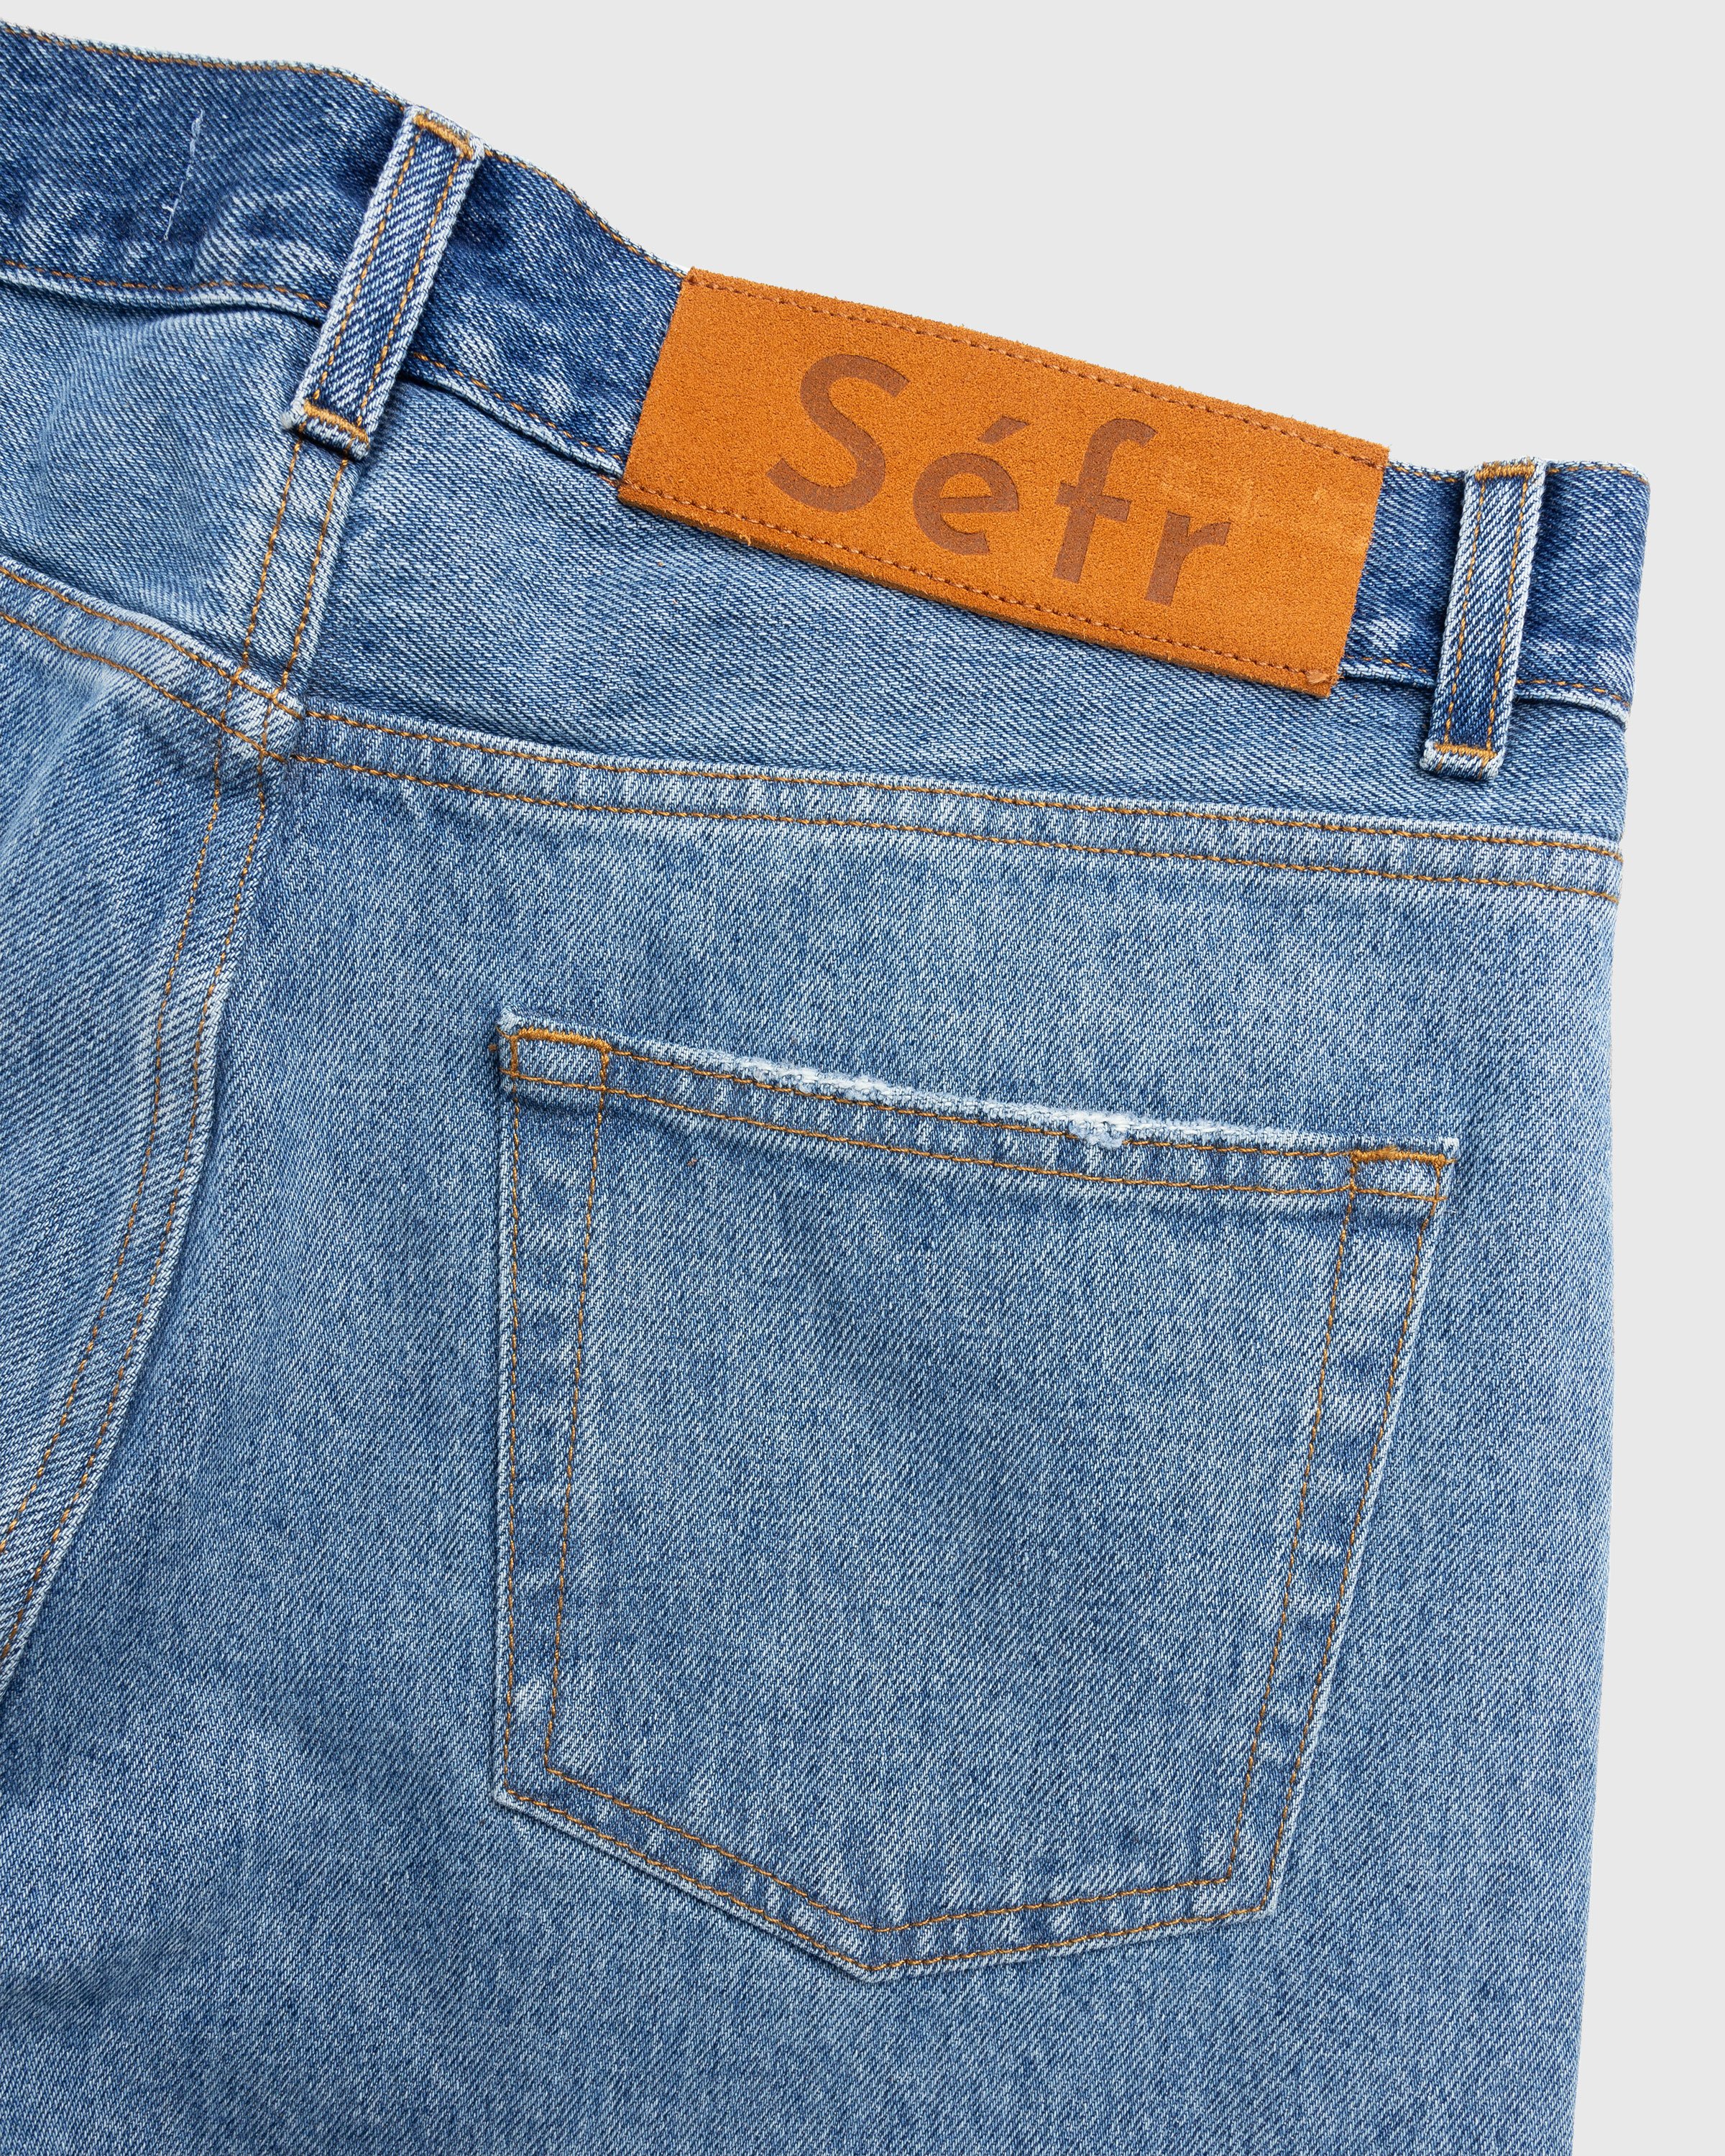 Séfr - Twisted Cut Jeans Two Split Indigo - Clothing - Blue - Image 6